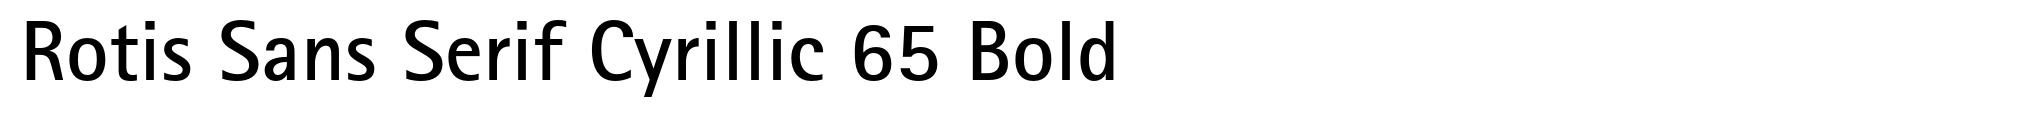 Rotis Sans Serif Cyrillic 65 Bold image